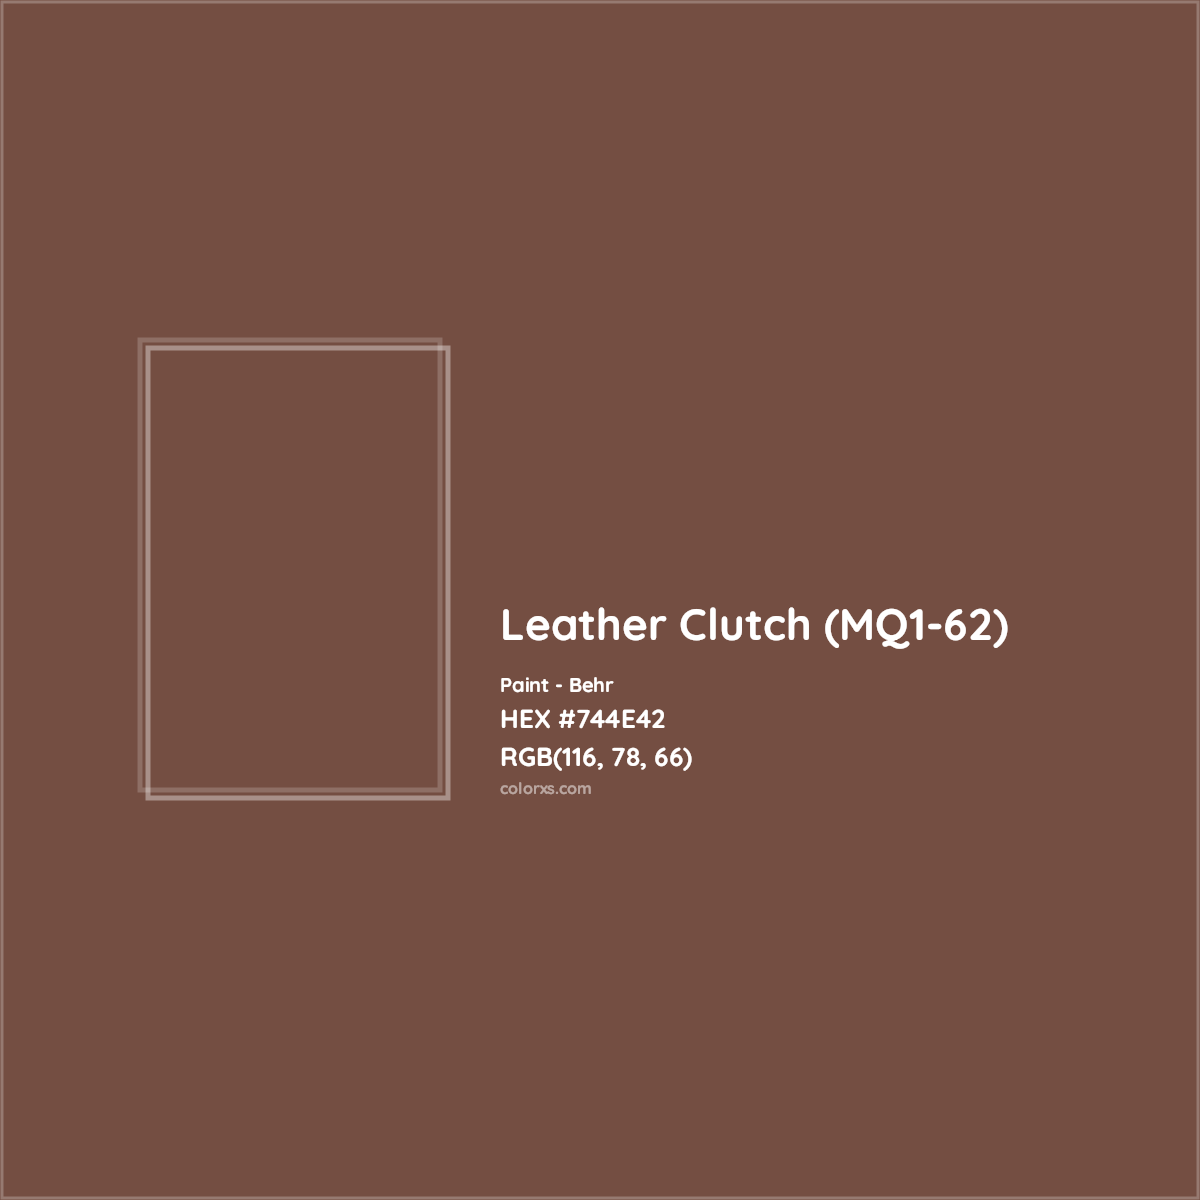 HEX #744E42 Leather Clutch (MQ1-62) Paint Behr - Color Code